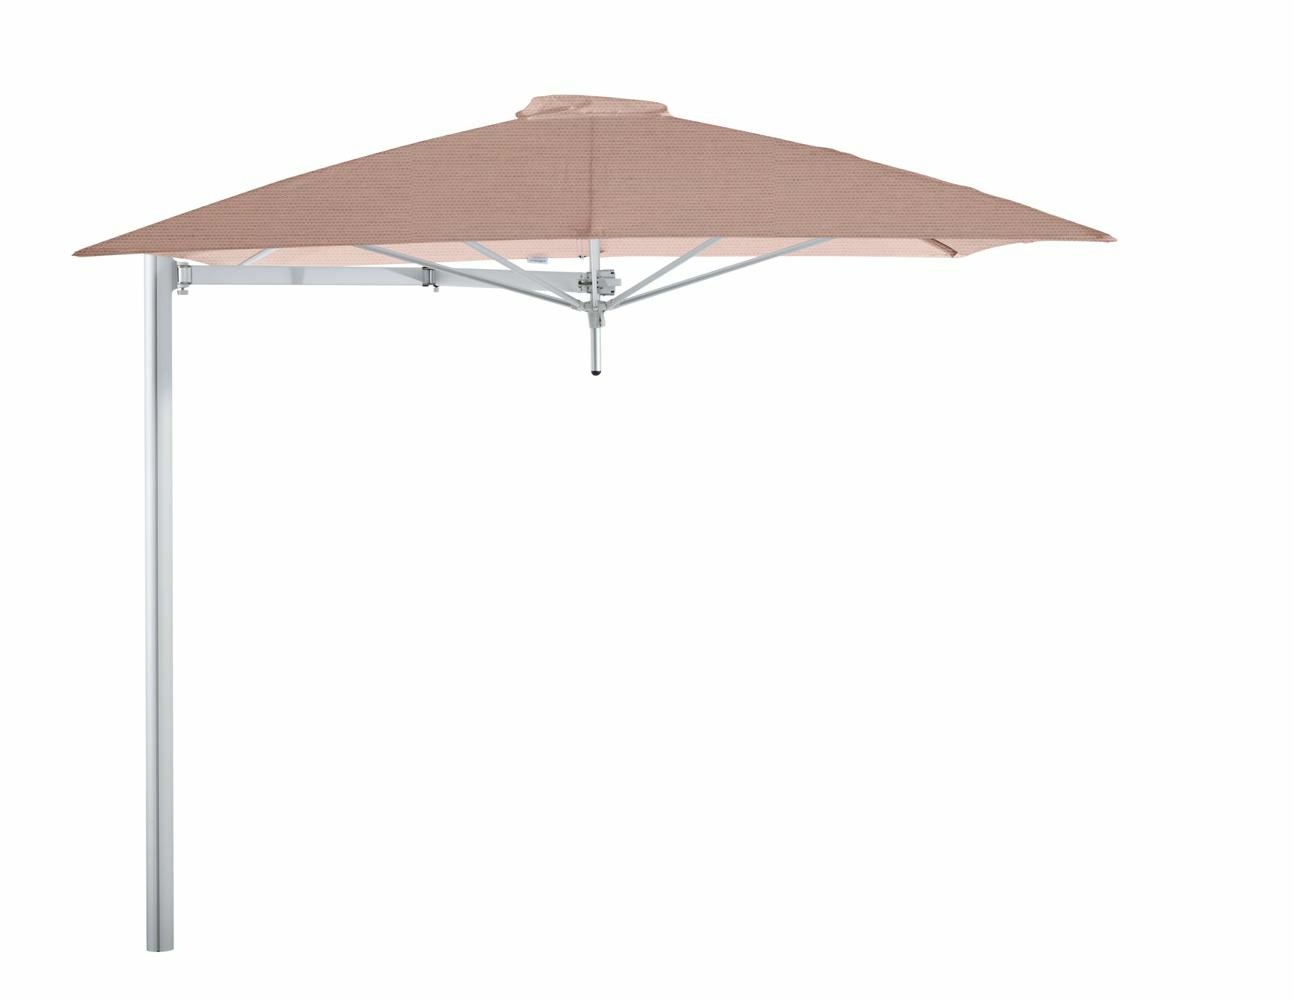 Paraflex cantilever umbrella square 2,3 m with Blush fabric and a Neo arm